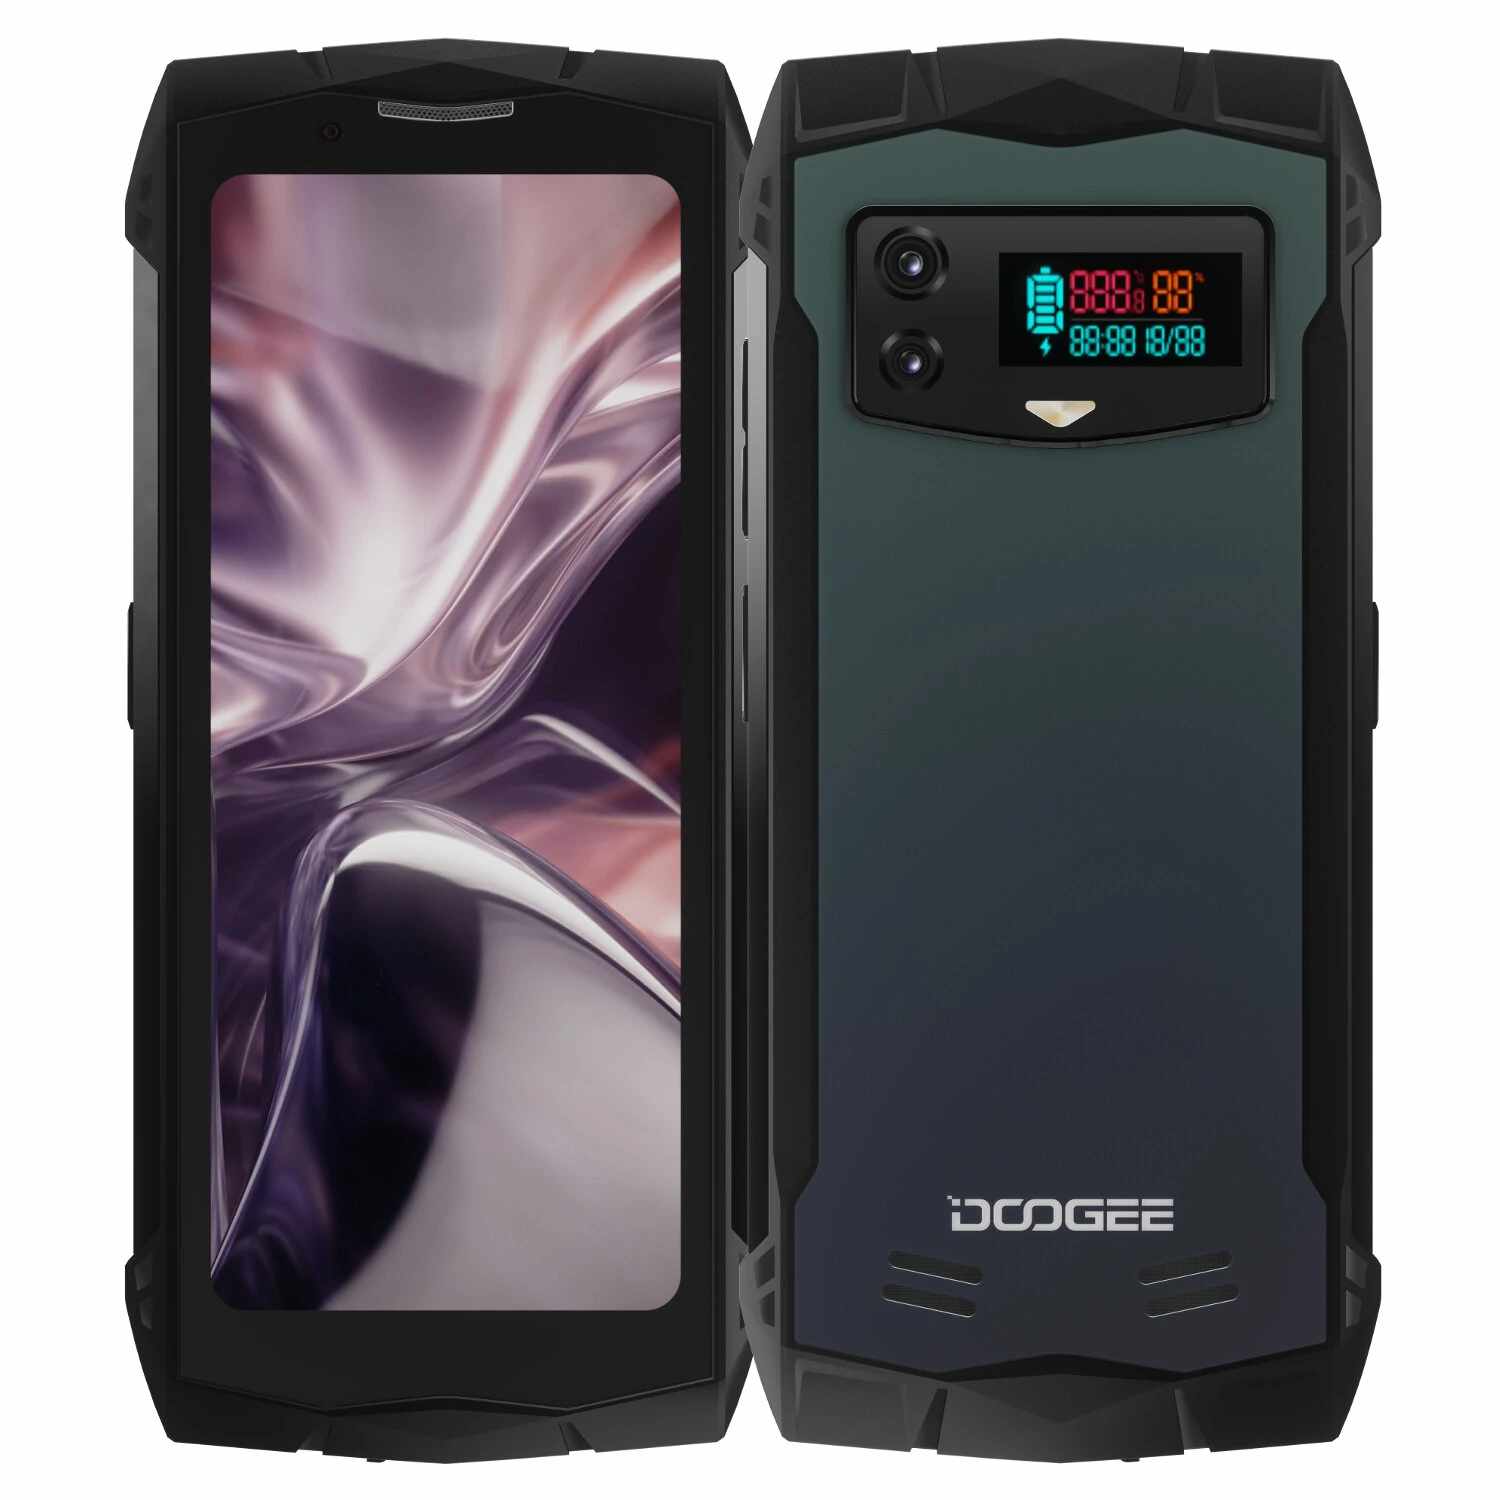 DOOGEE Smini Innovative Rear Display Rugged Smartphone Banggood Coupon Promo Code